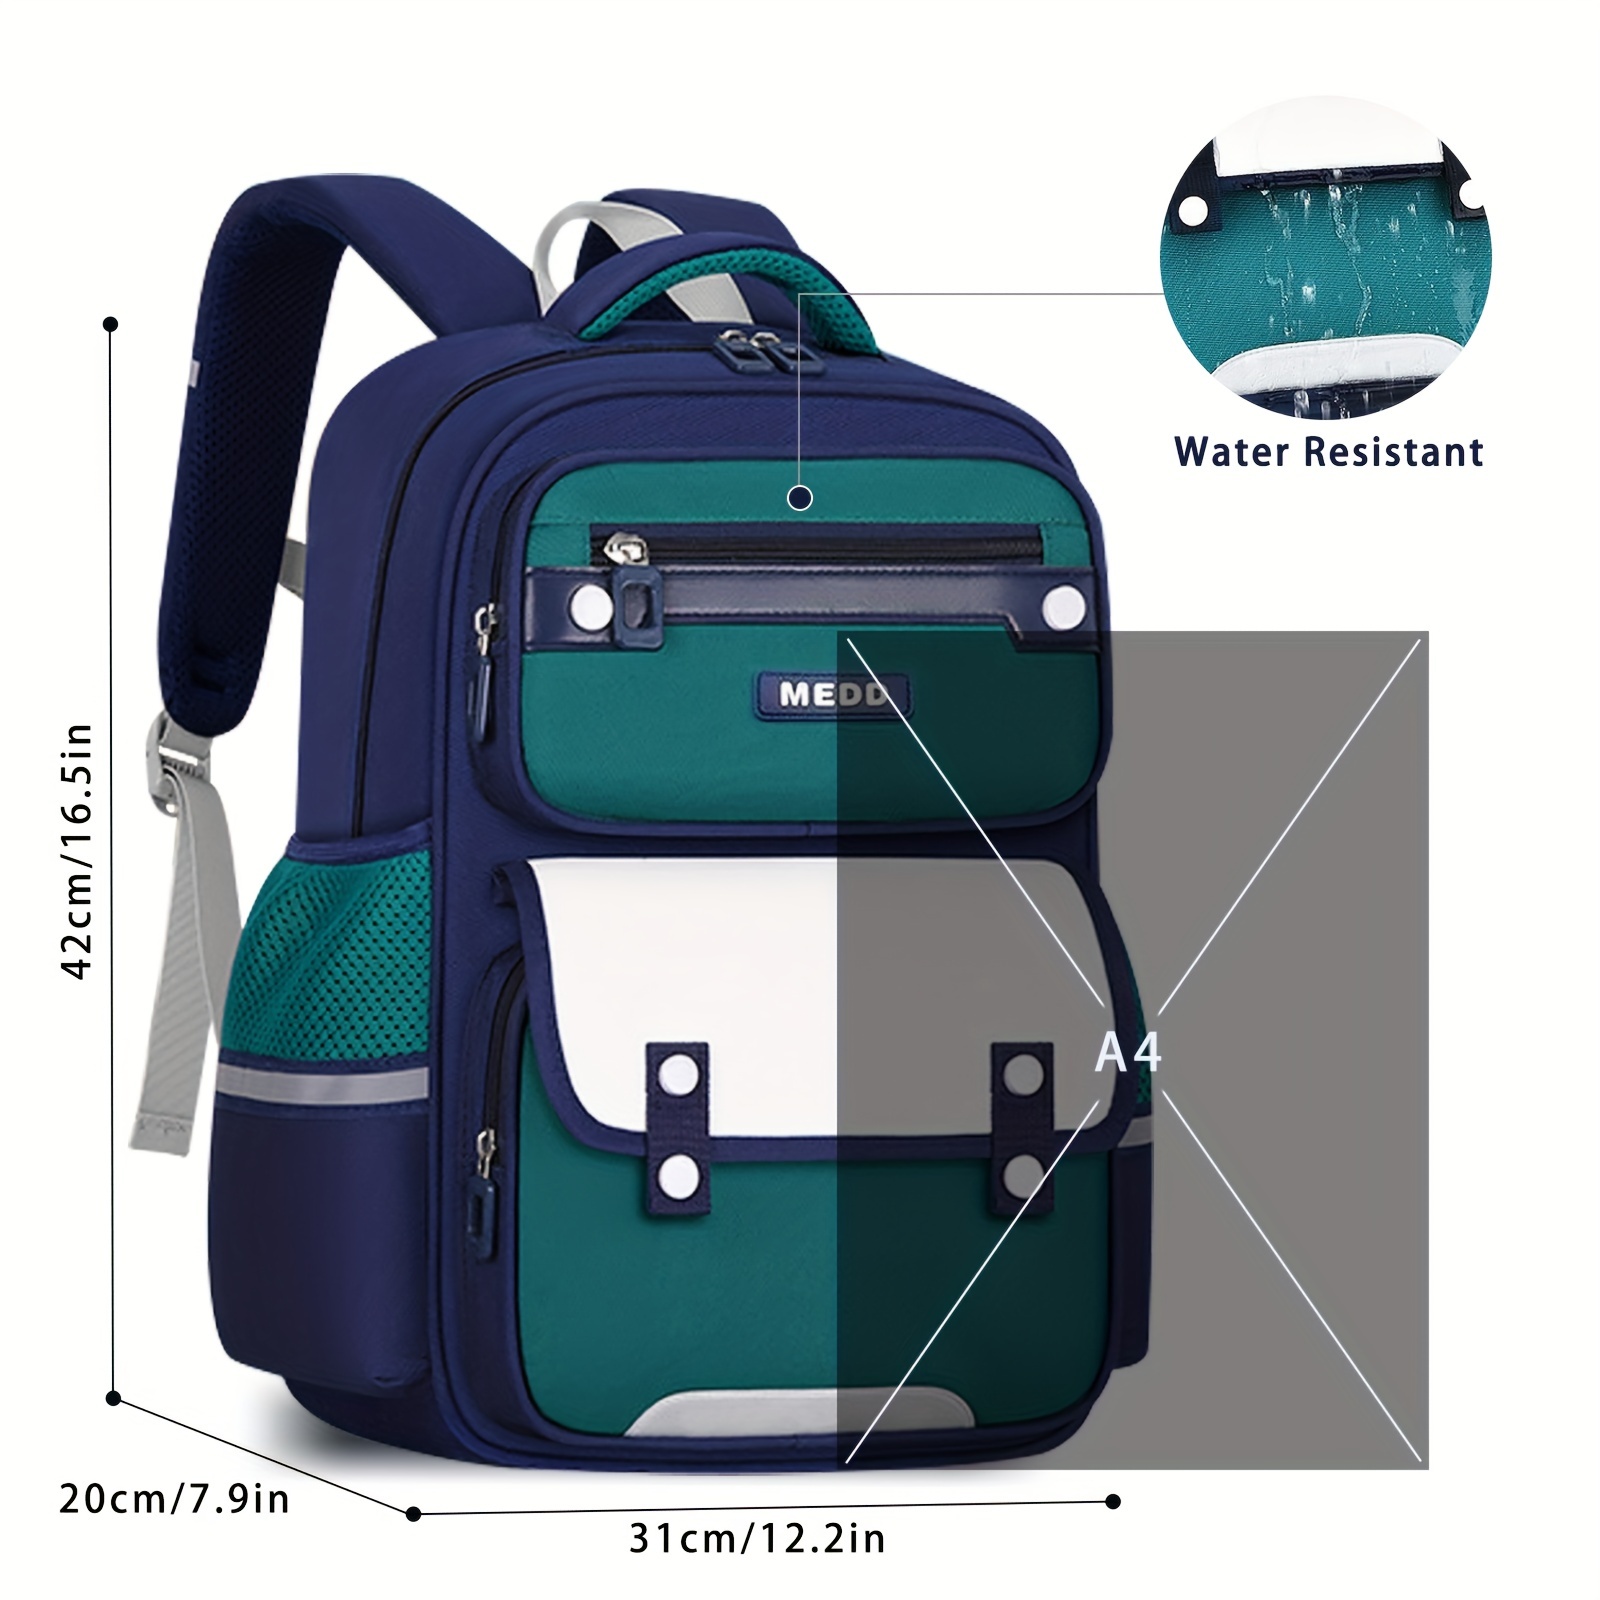 Children's Large Capacity Backpack, Water-resistant Cute Schoolbag